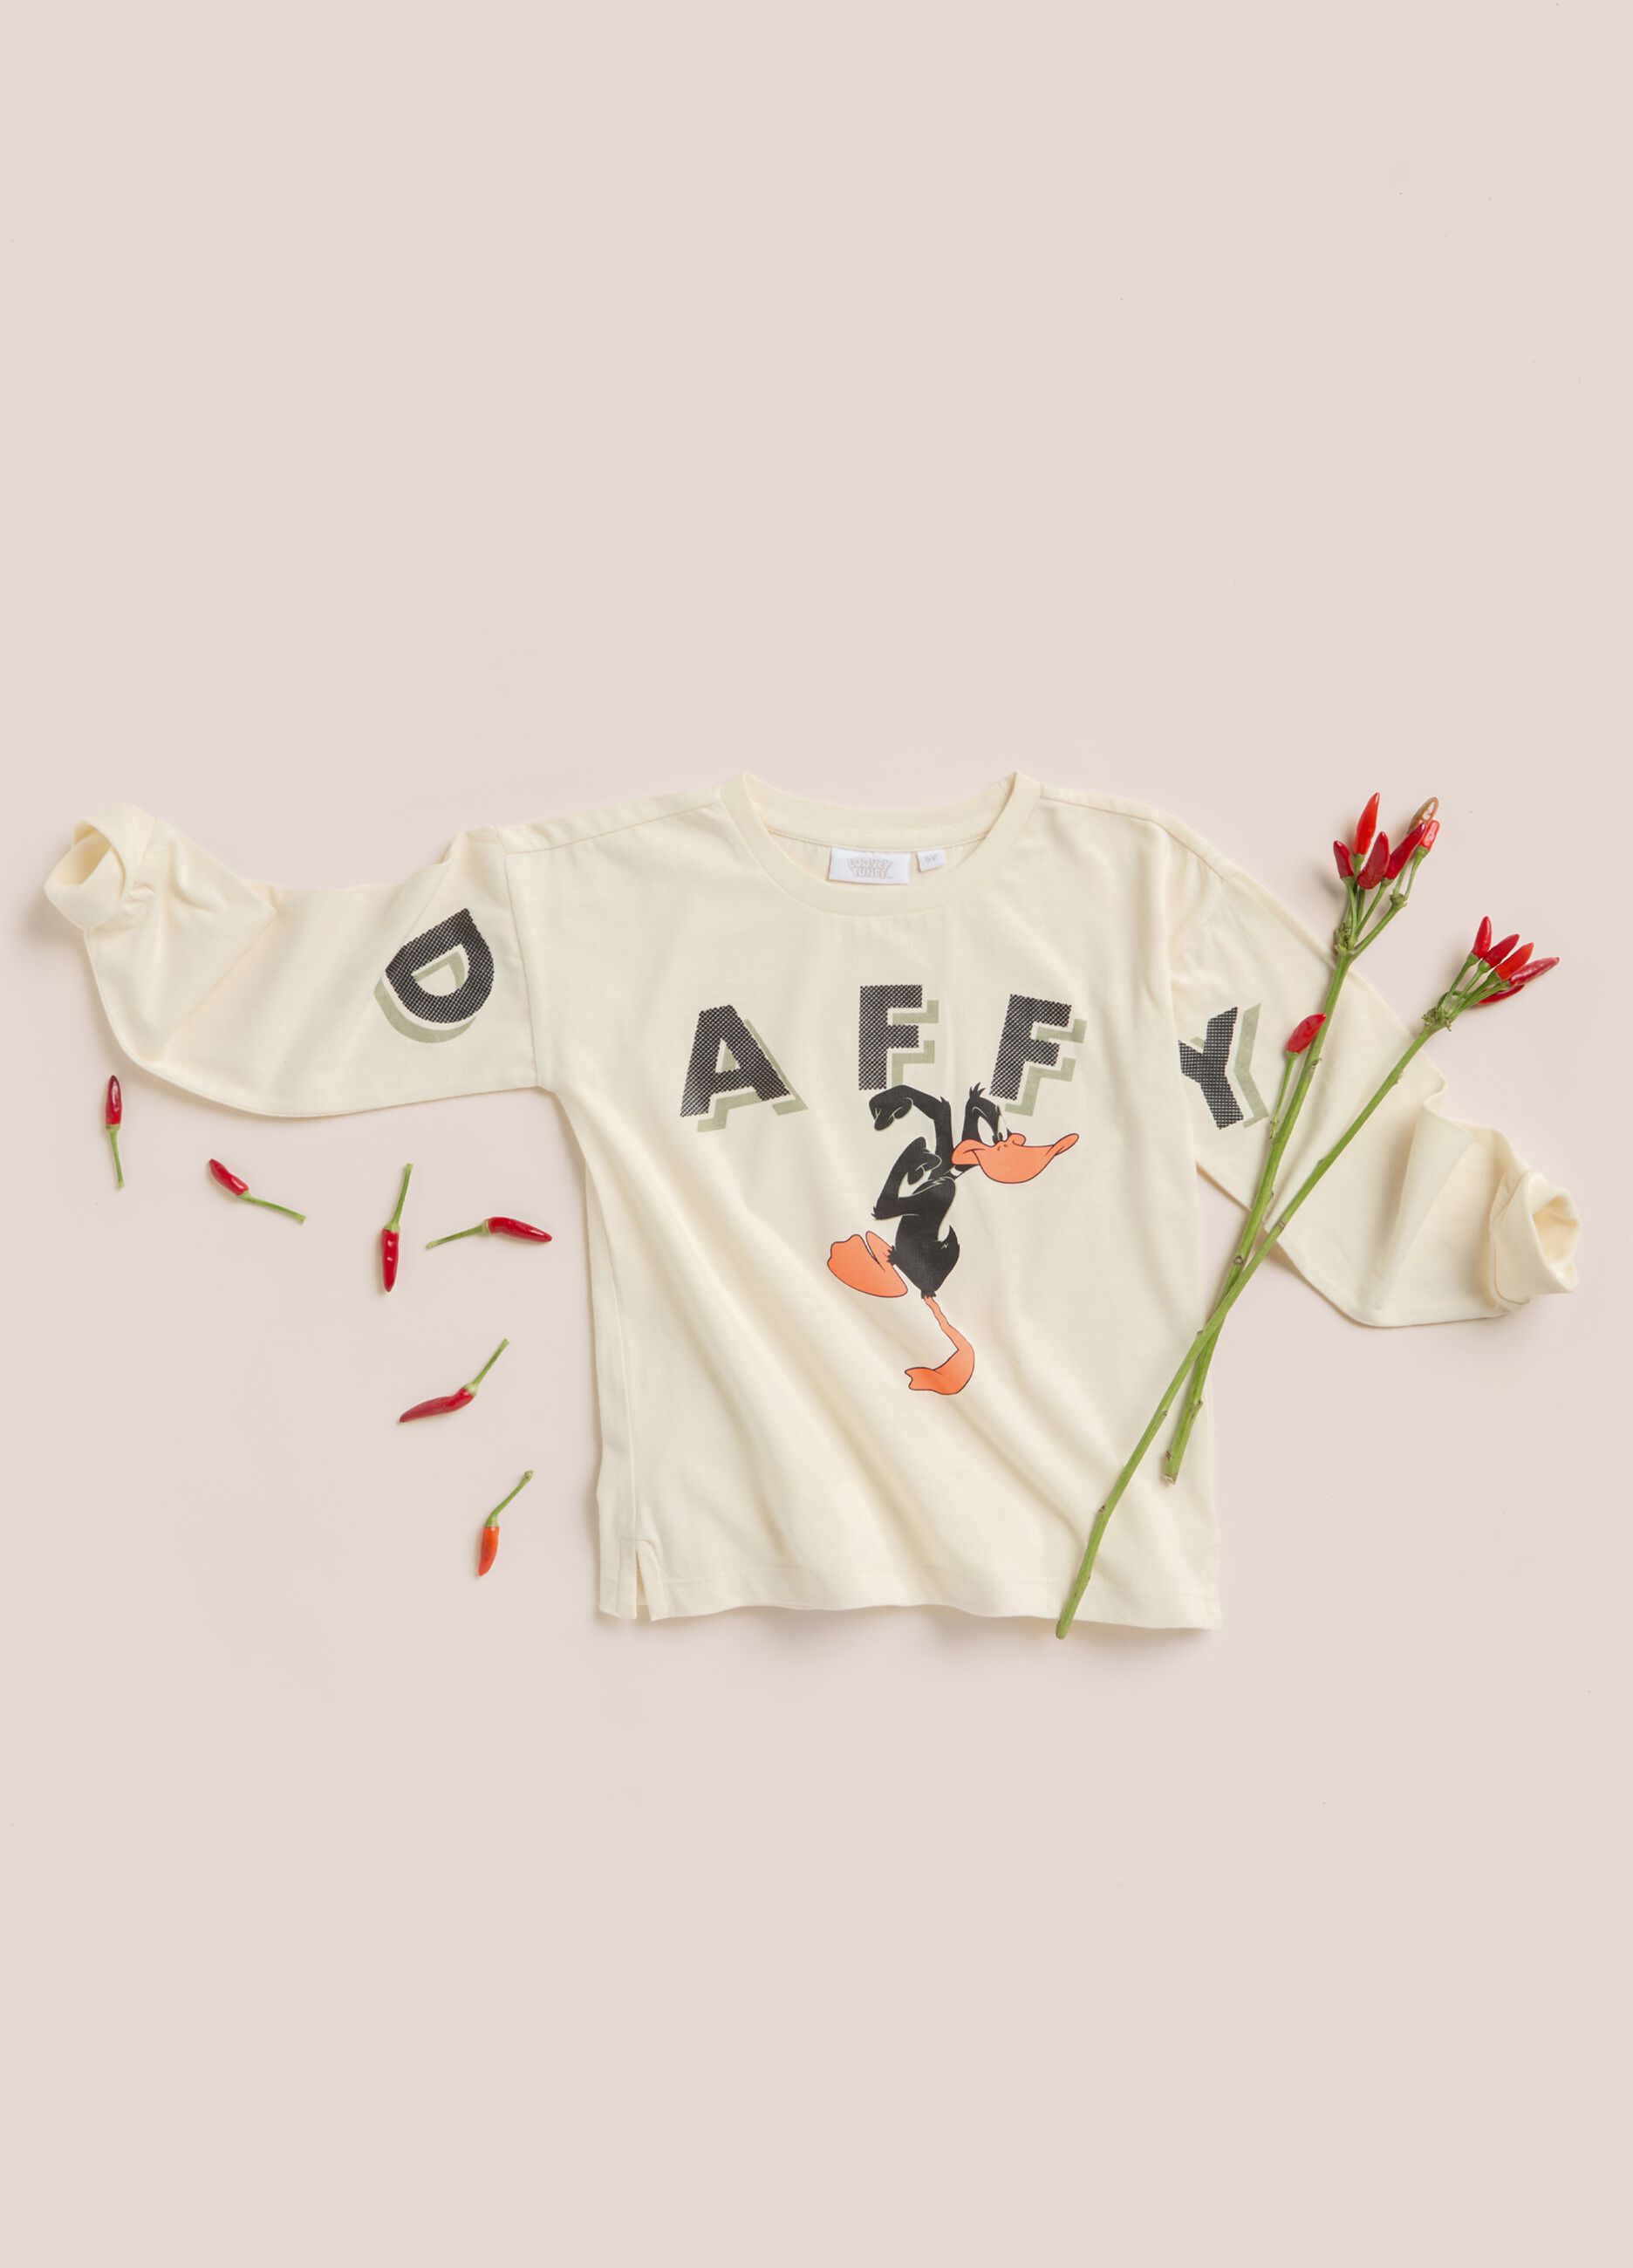 IANA Daffy Duck T-shirt in 100% cotton